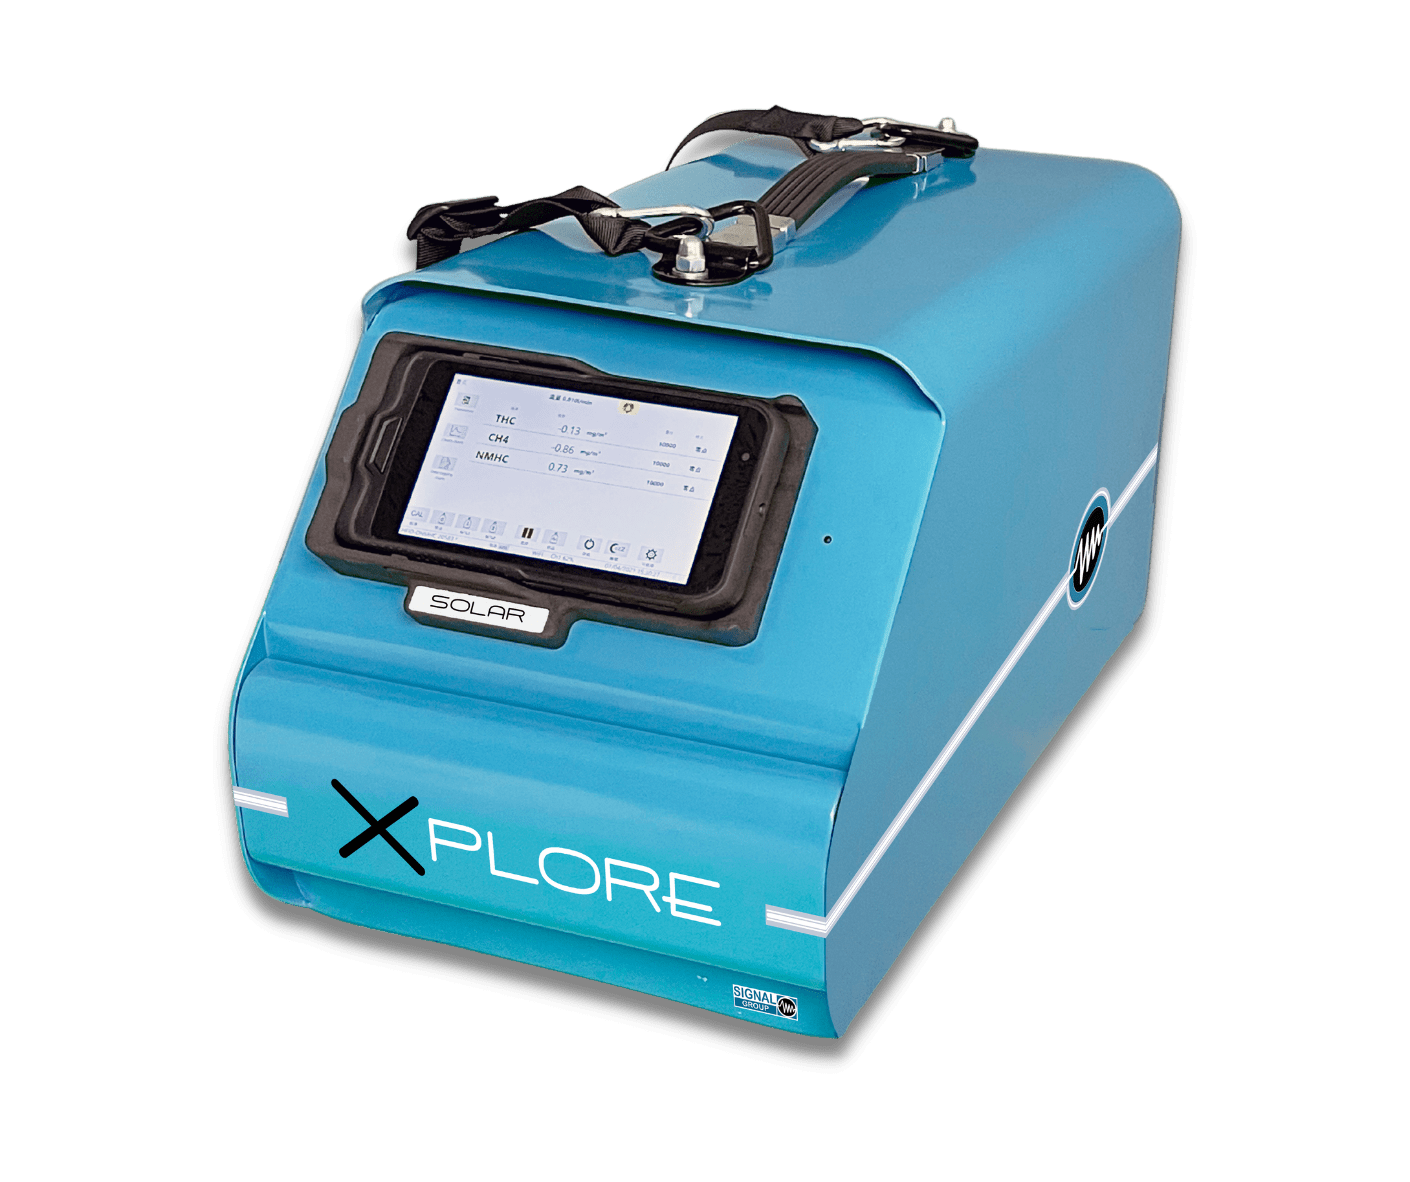 S4 SOLAR XPLORE – Portable heated FID VOC analyser